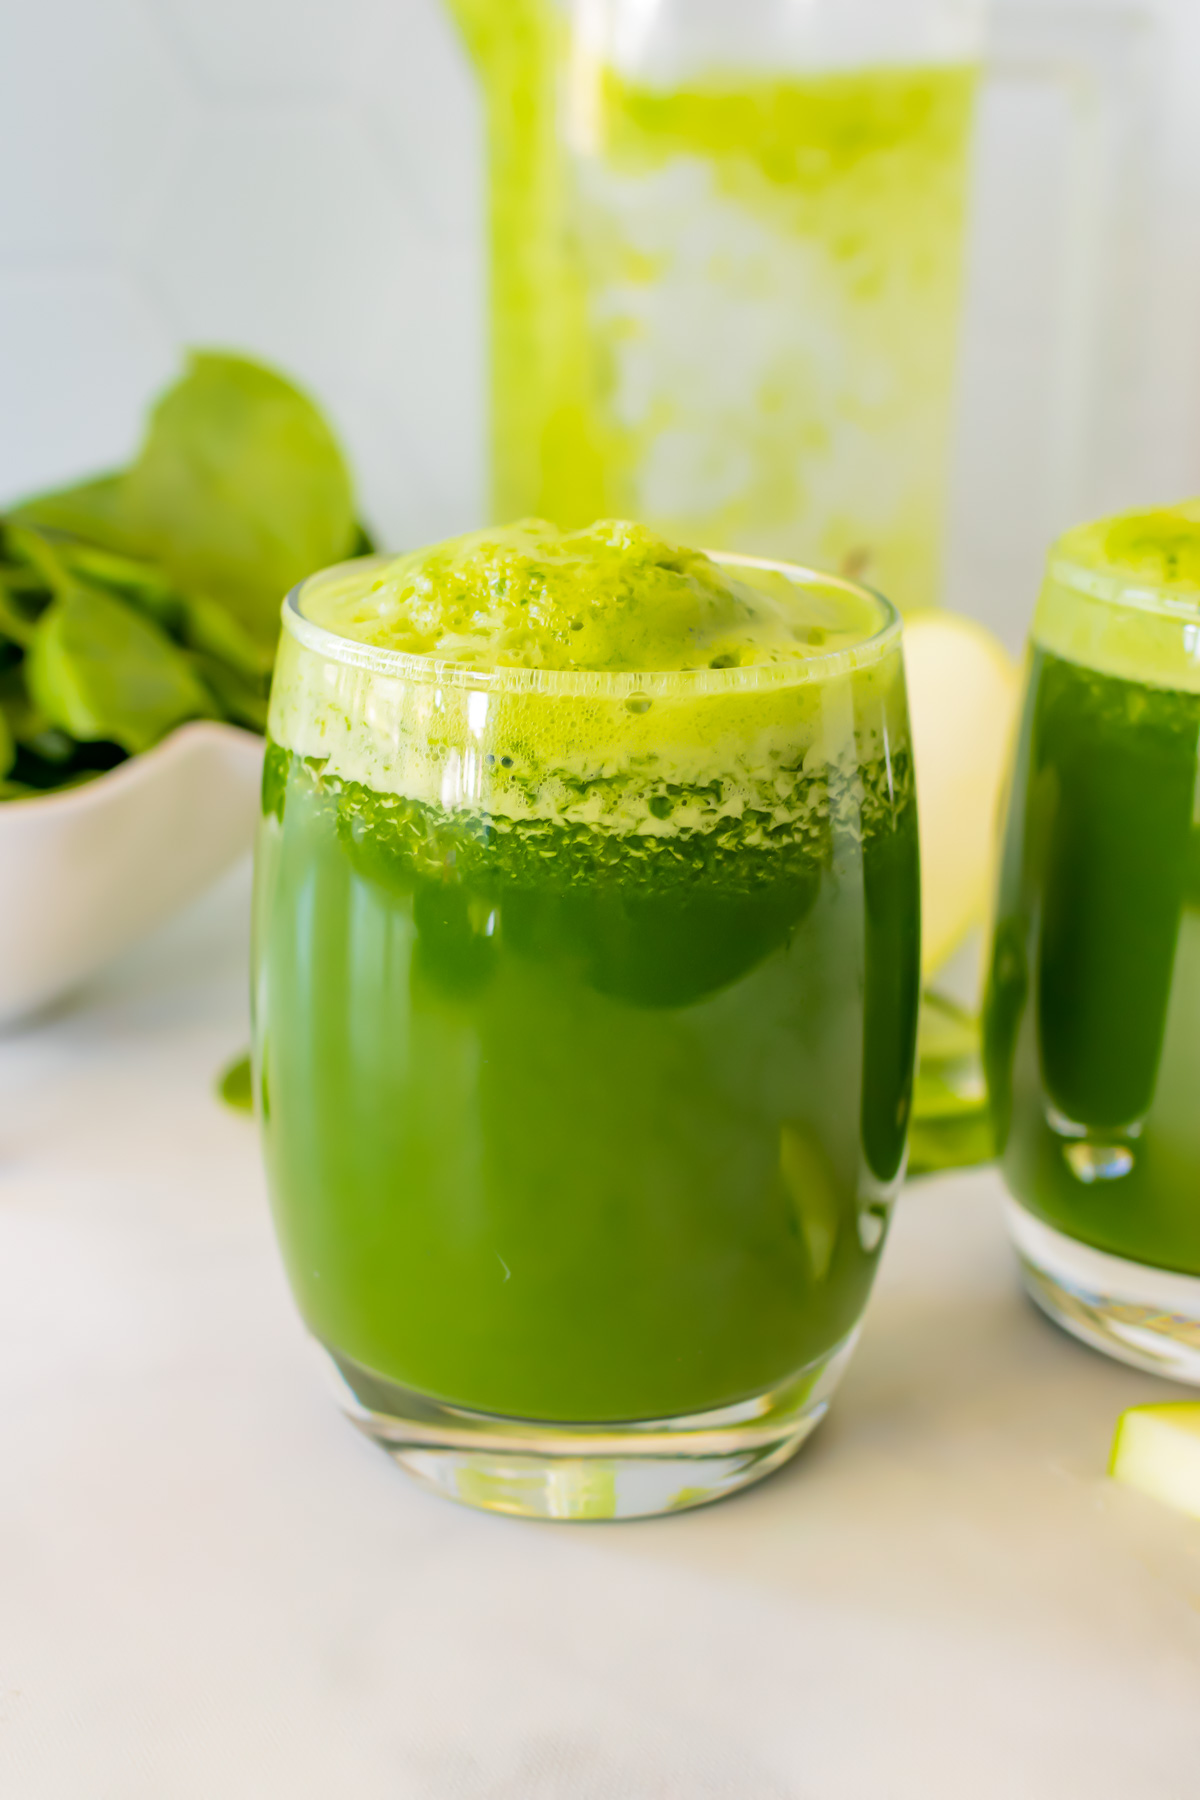 Glasses of green juice.